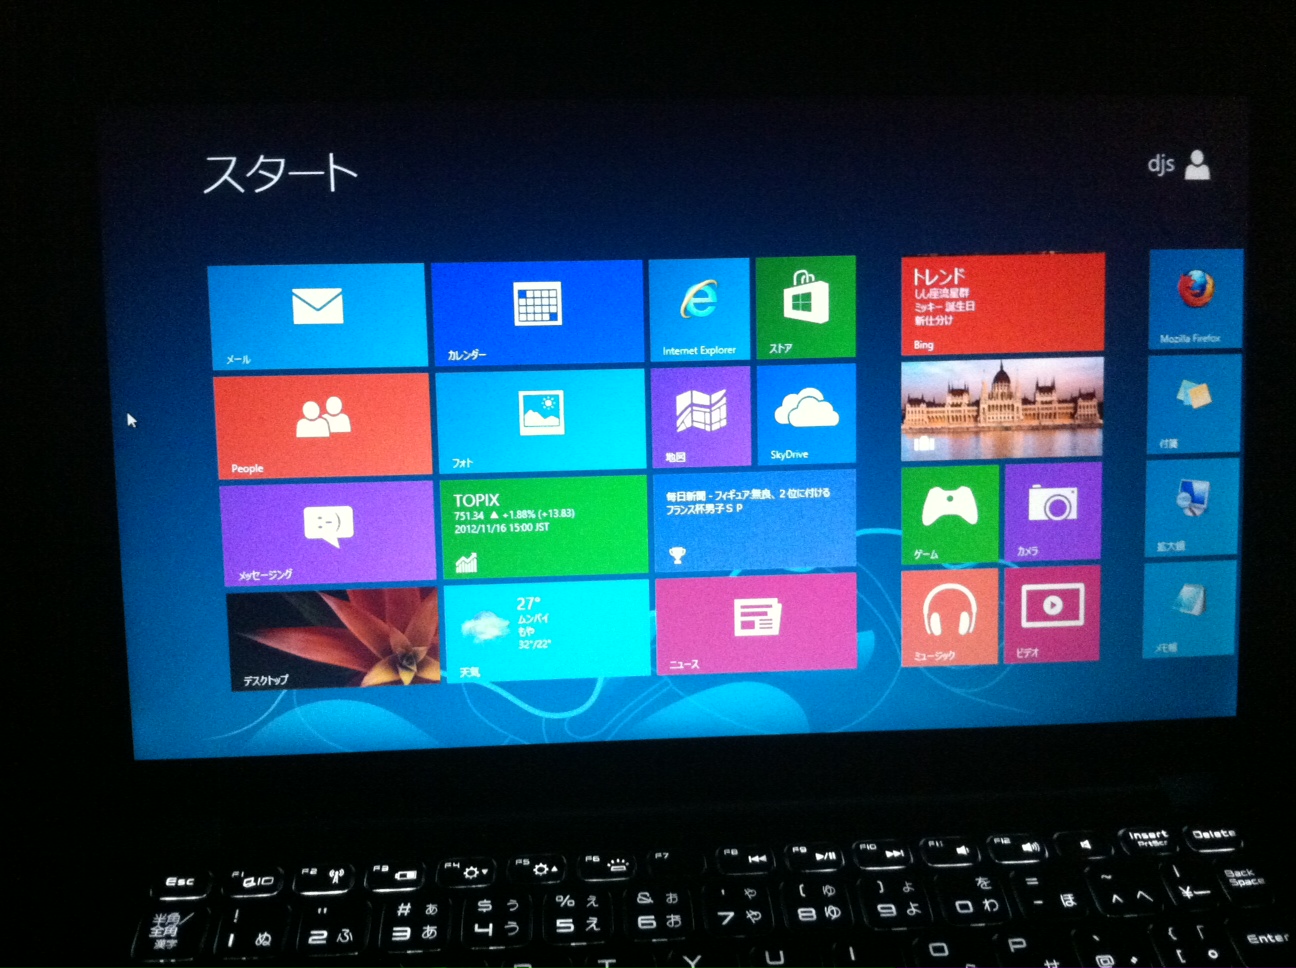 Japanese Windows 8 - Japan All Over - 